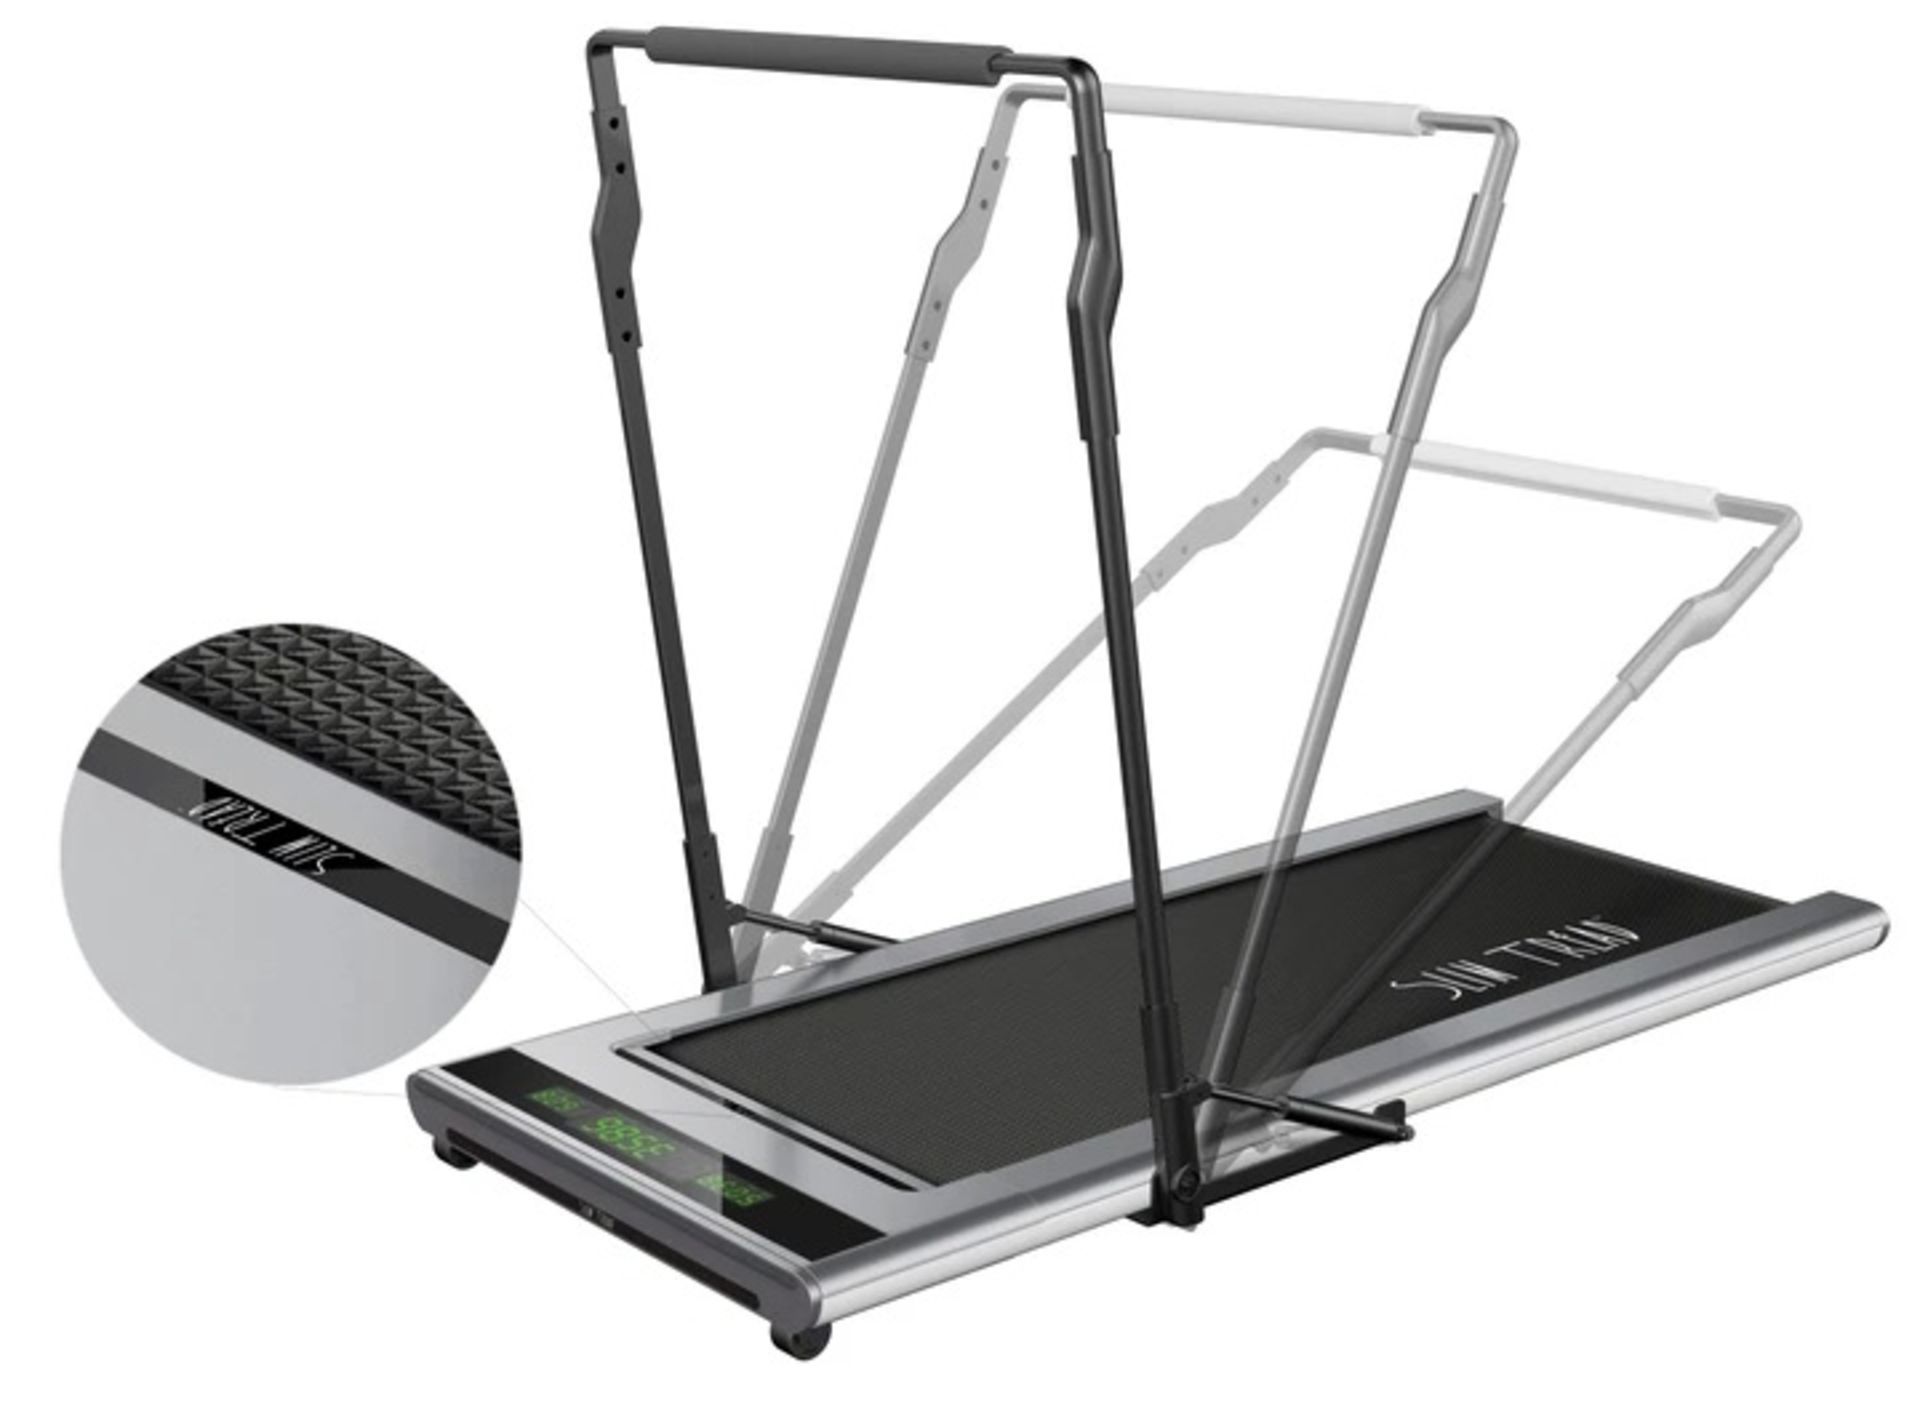 1 x Slim Tread Ultra Thin Smart Treadmill Running / Walking Machine - Lightweight With Folding - Image 5 of 8